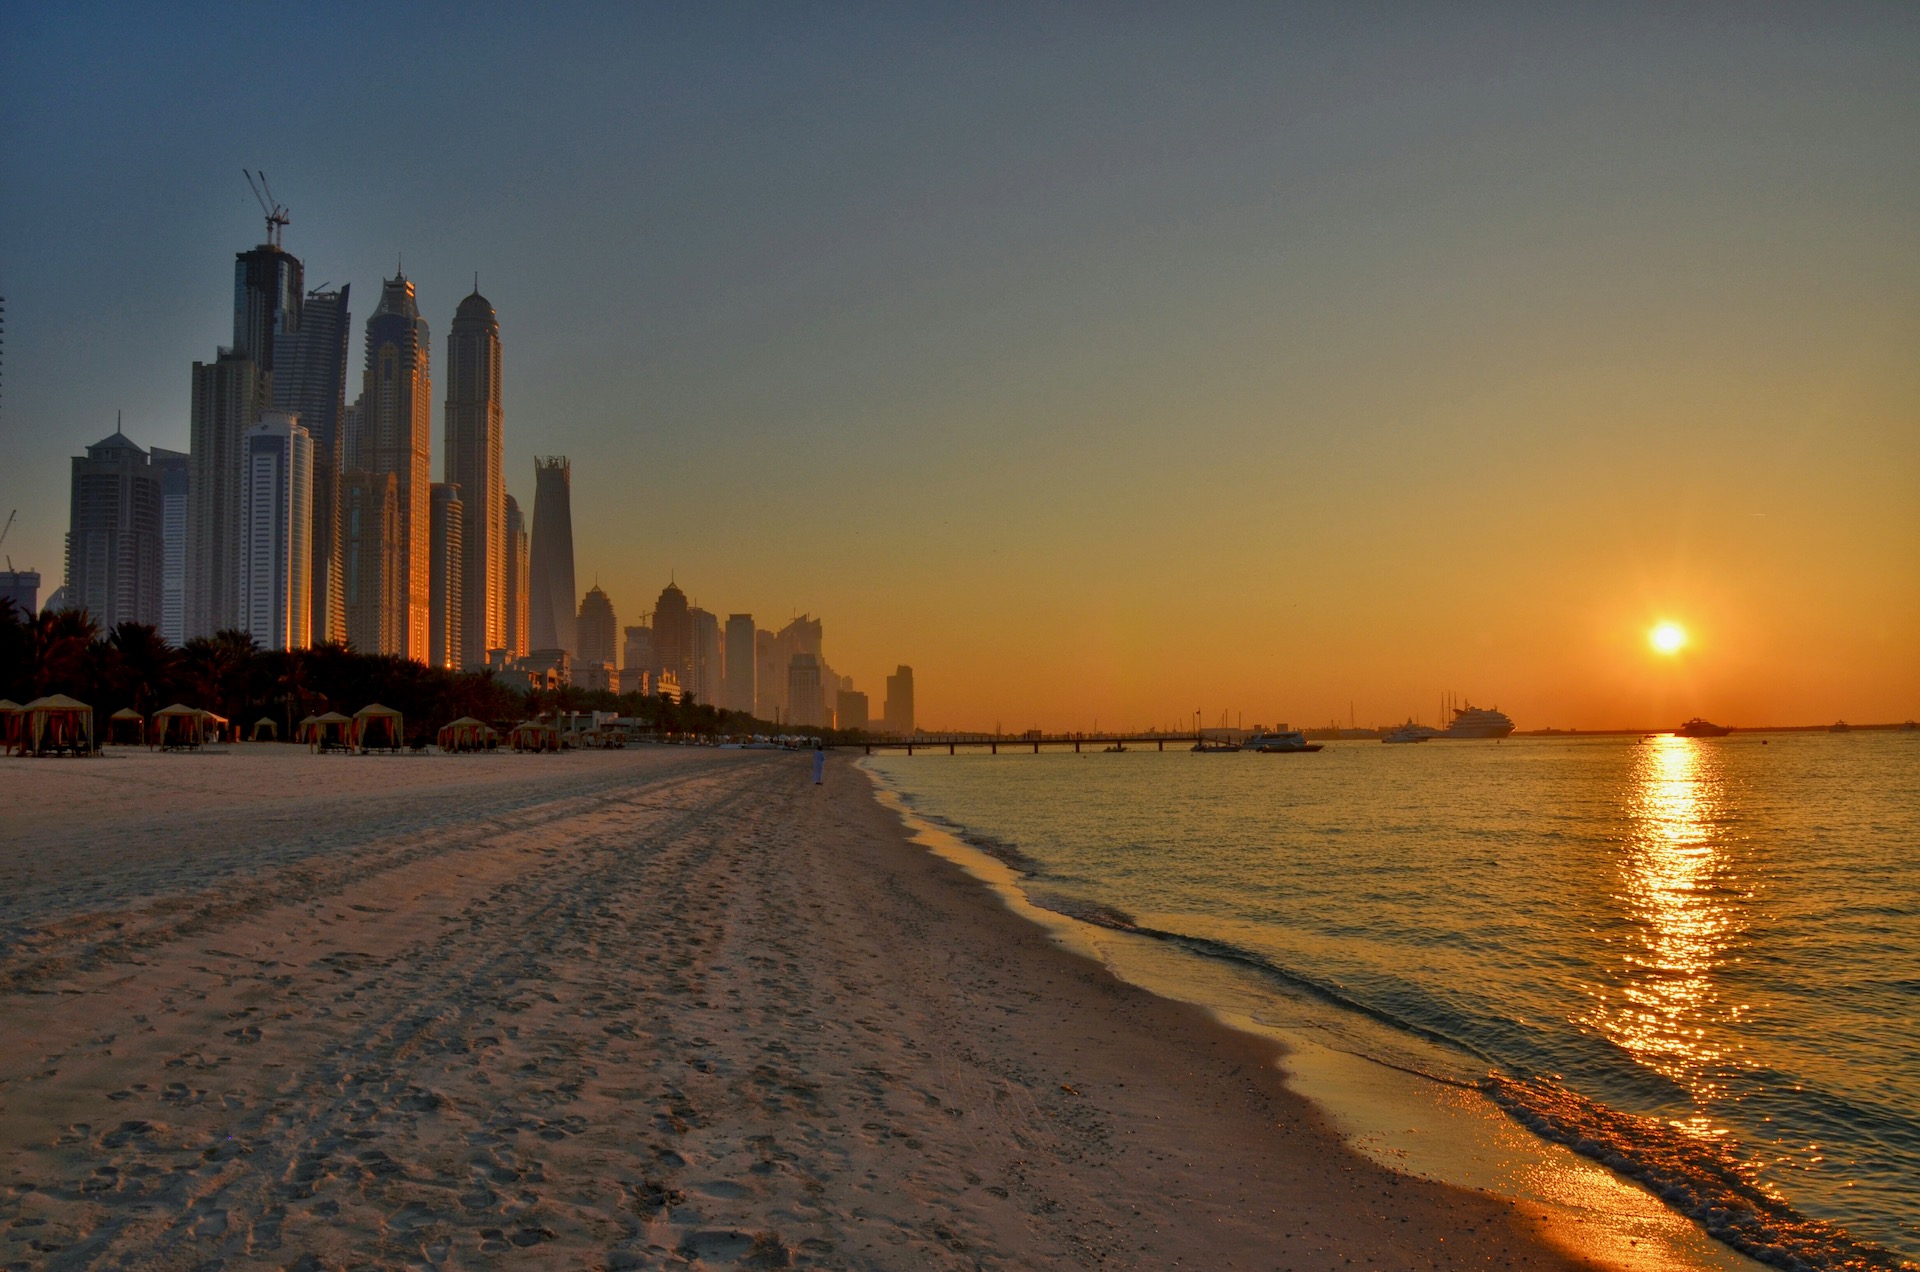 An image of Dubai.